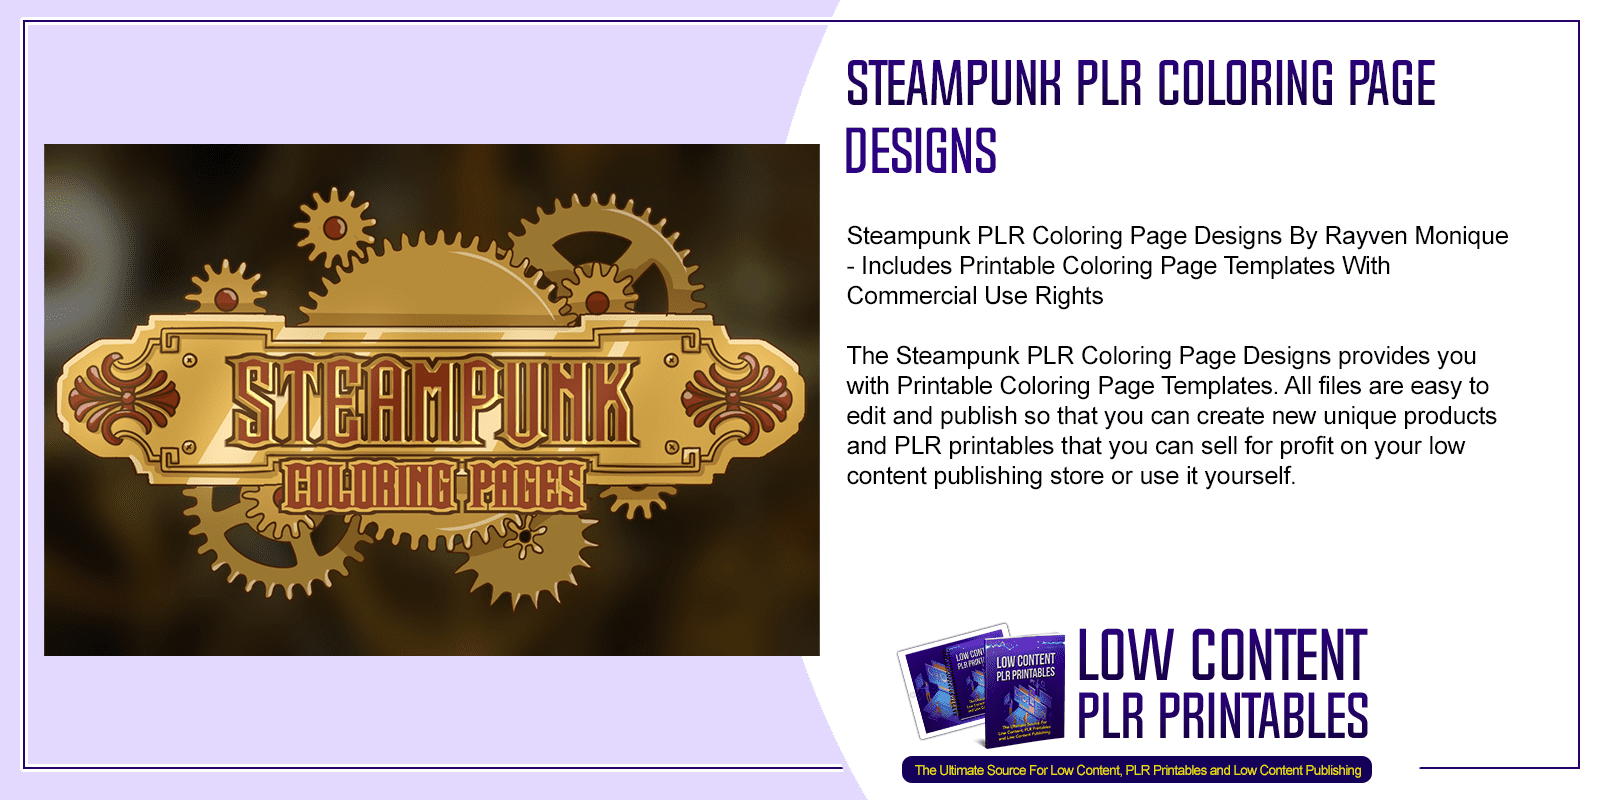 Steampunk PLR Coloring Page Designs